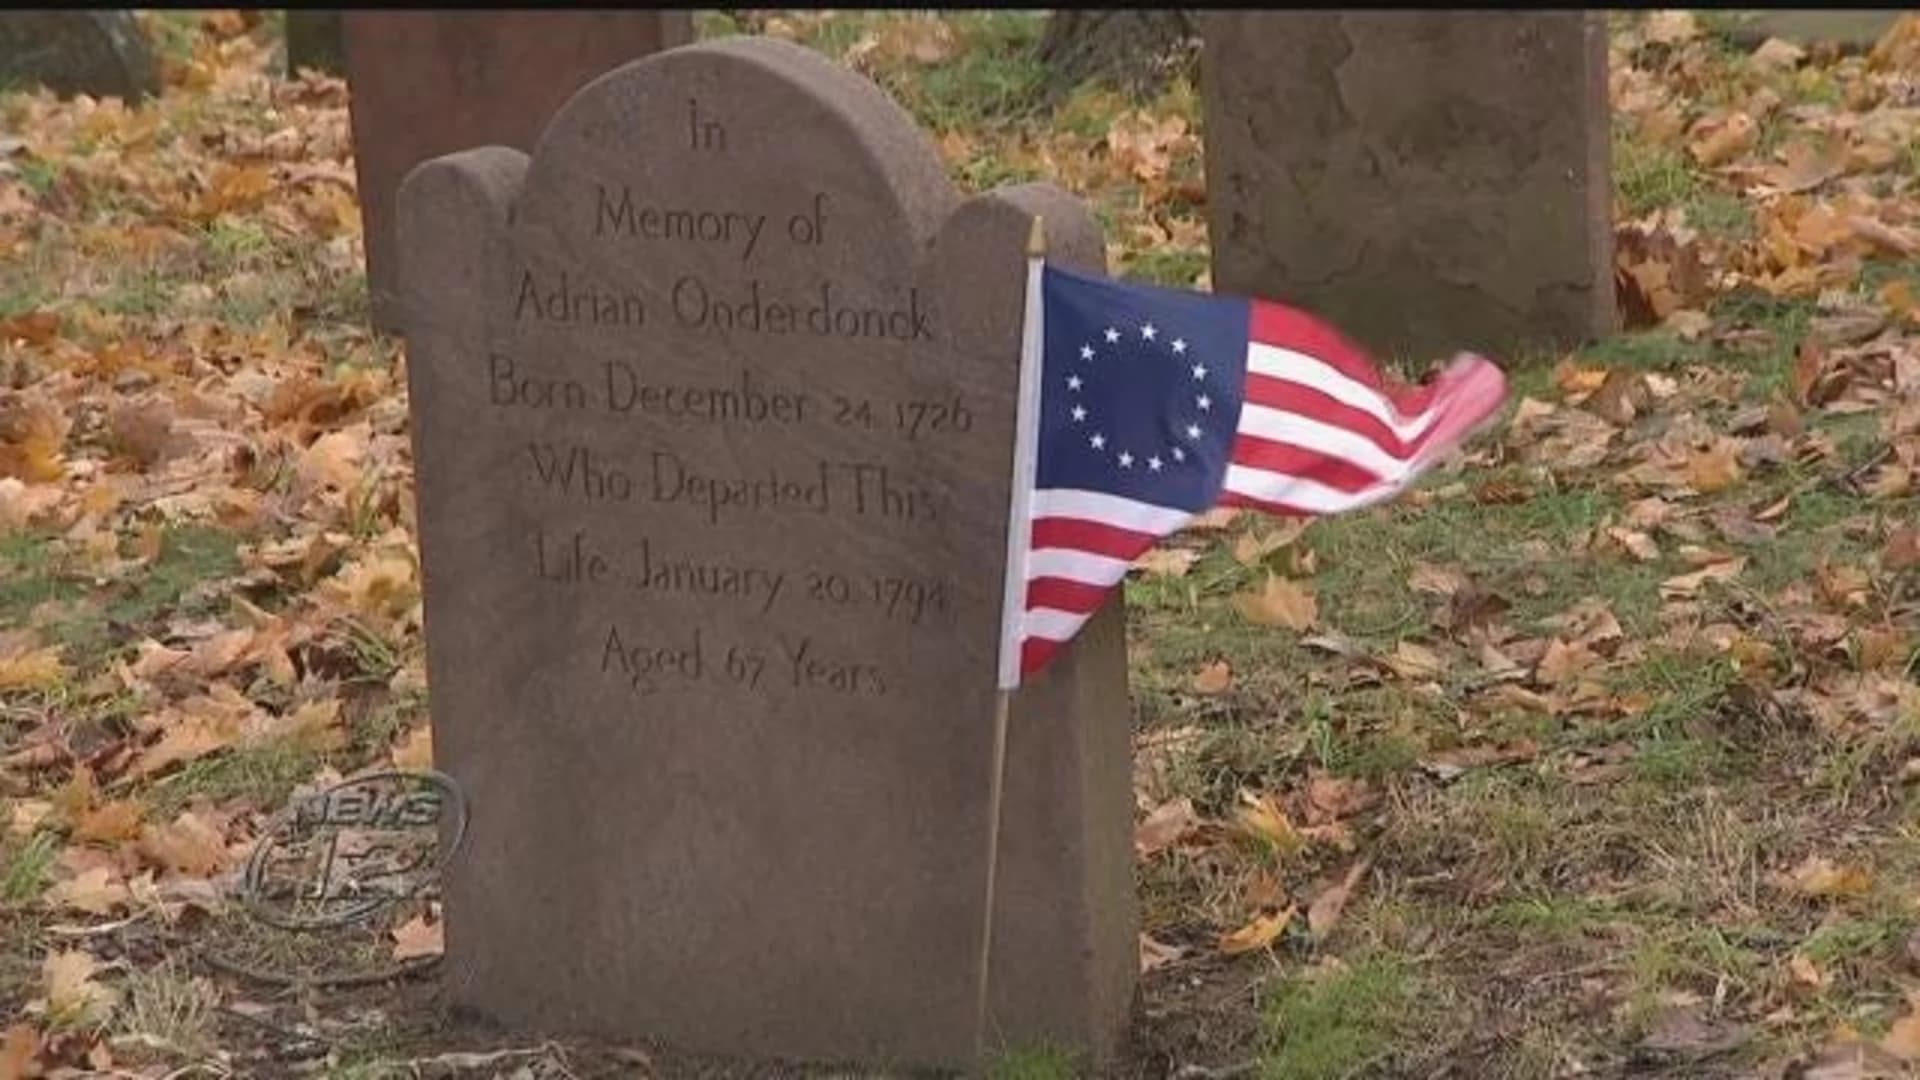 Group takes on monumental task of restoring historic cemeteries